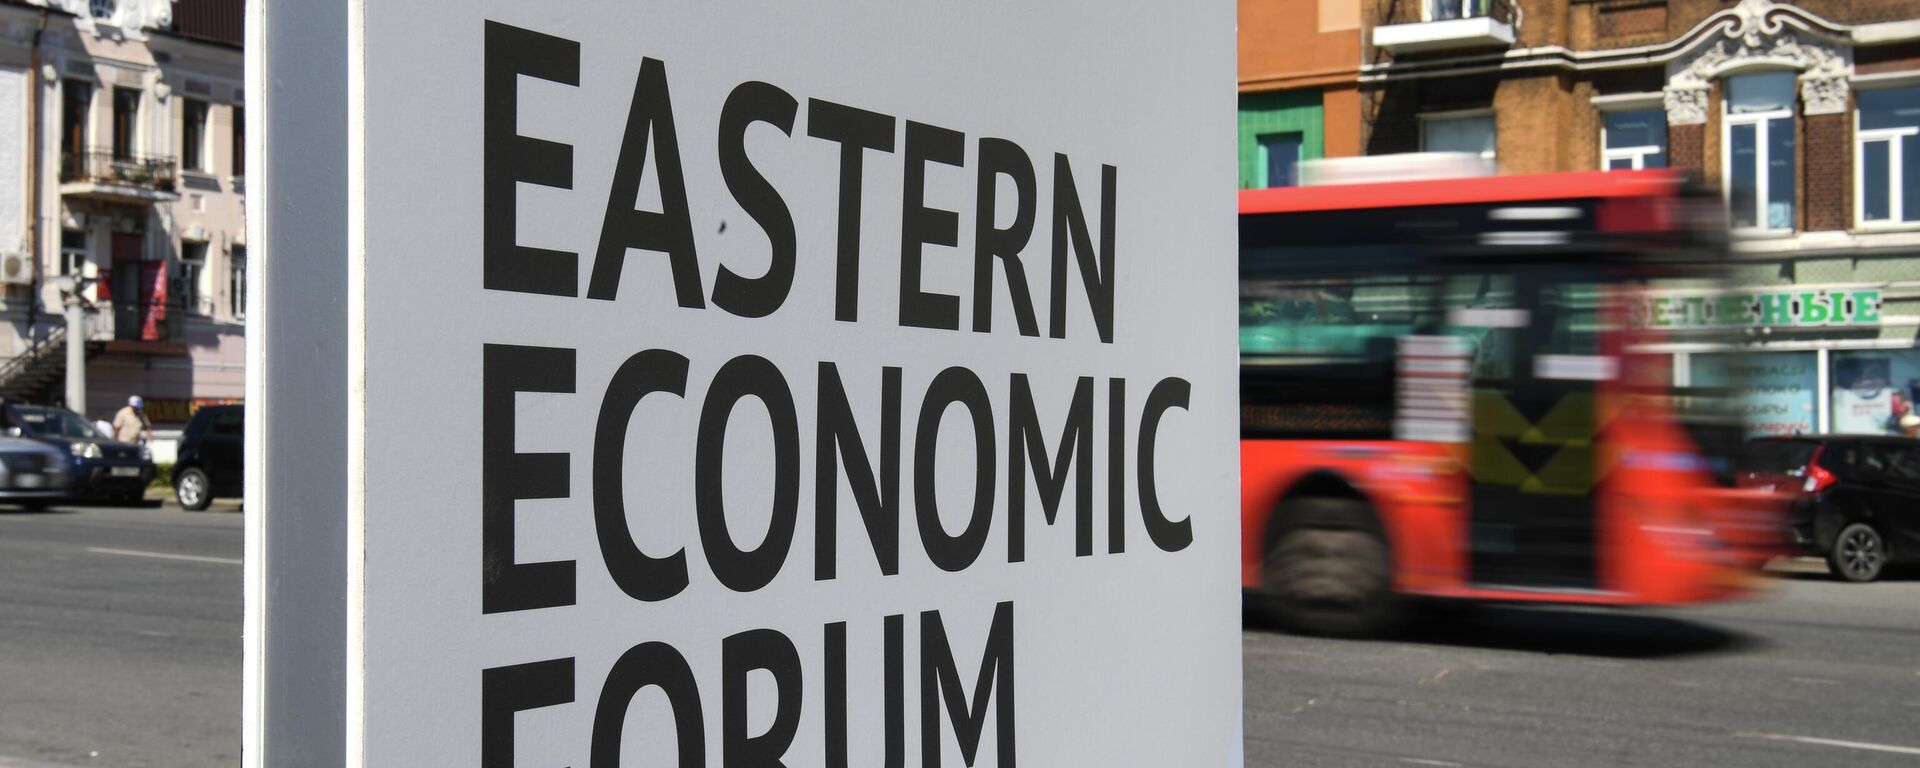 Eastern Economic Forum (EEF) banner - Sputnik International, 1920, 04.09.2022